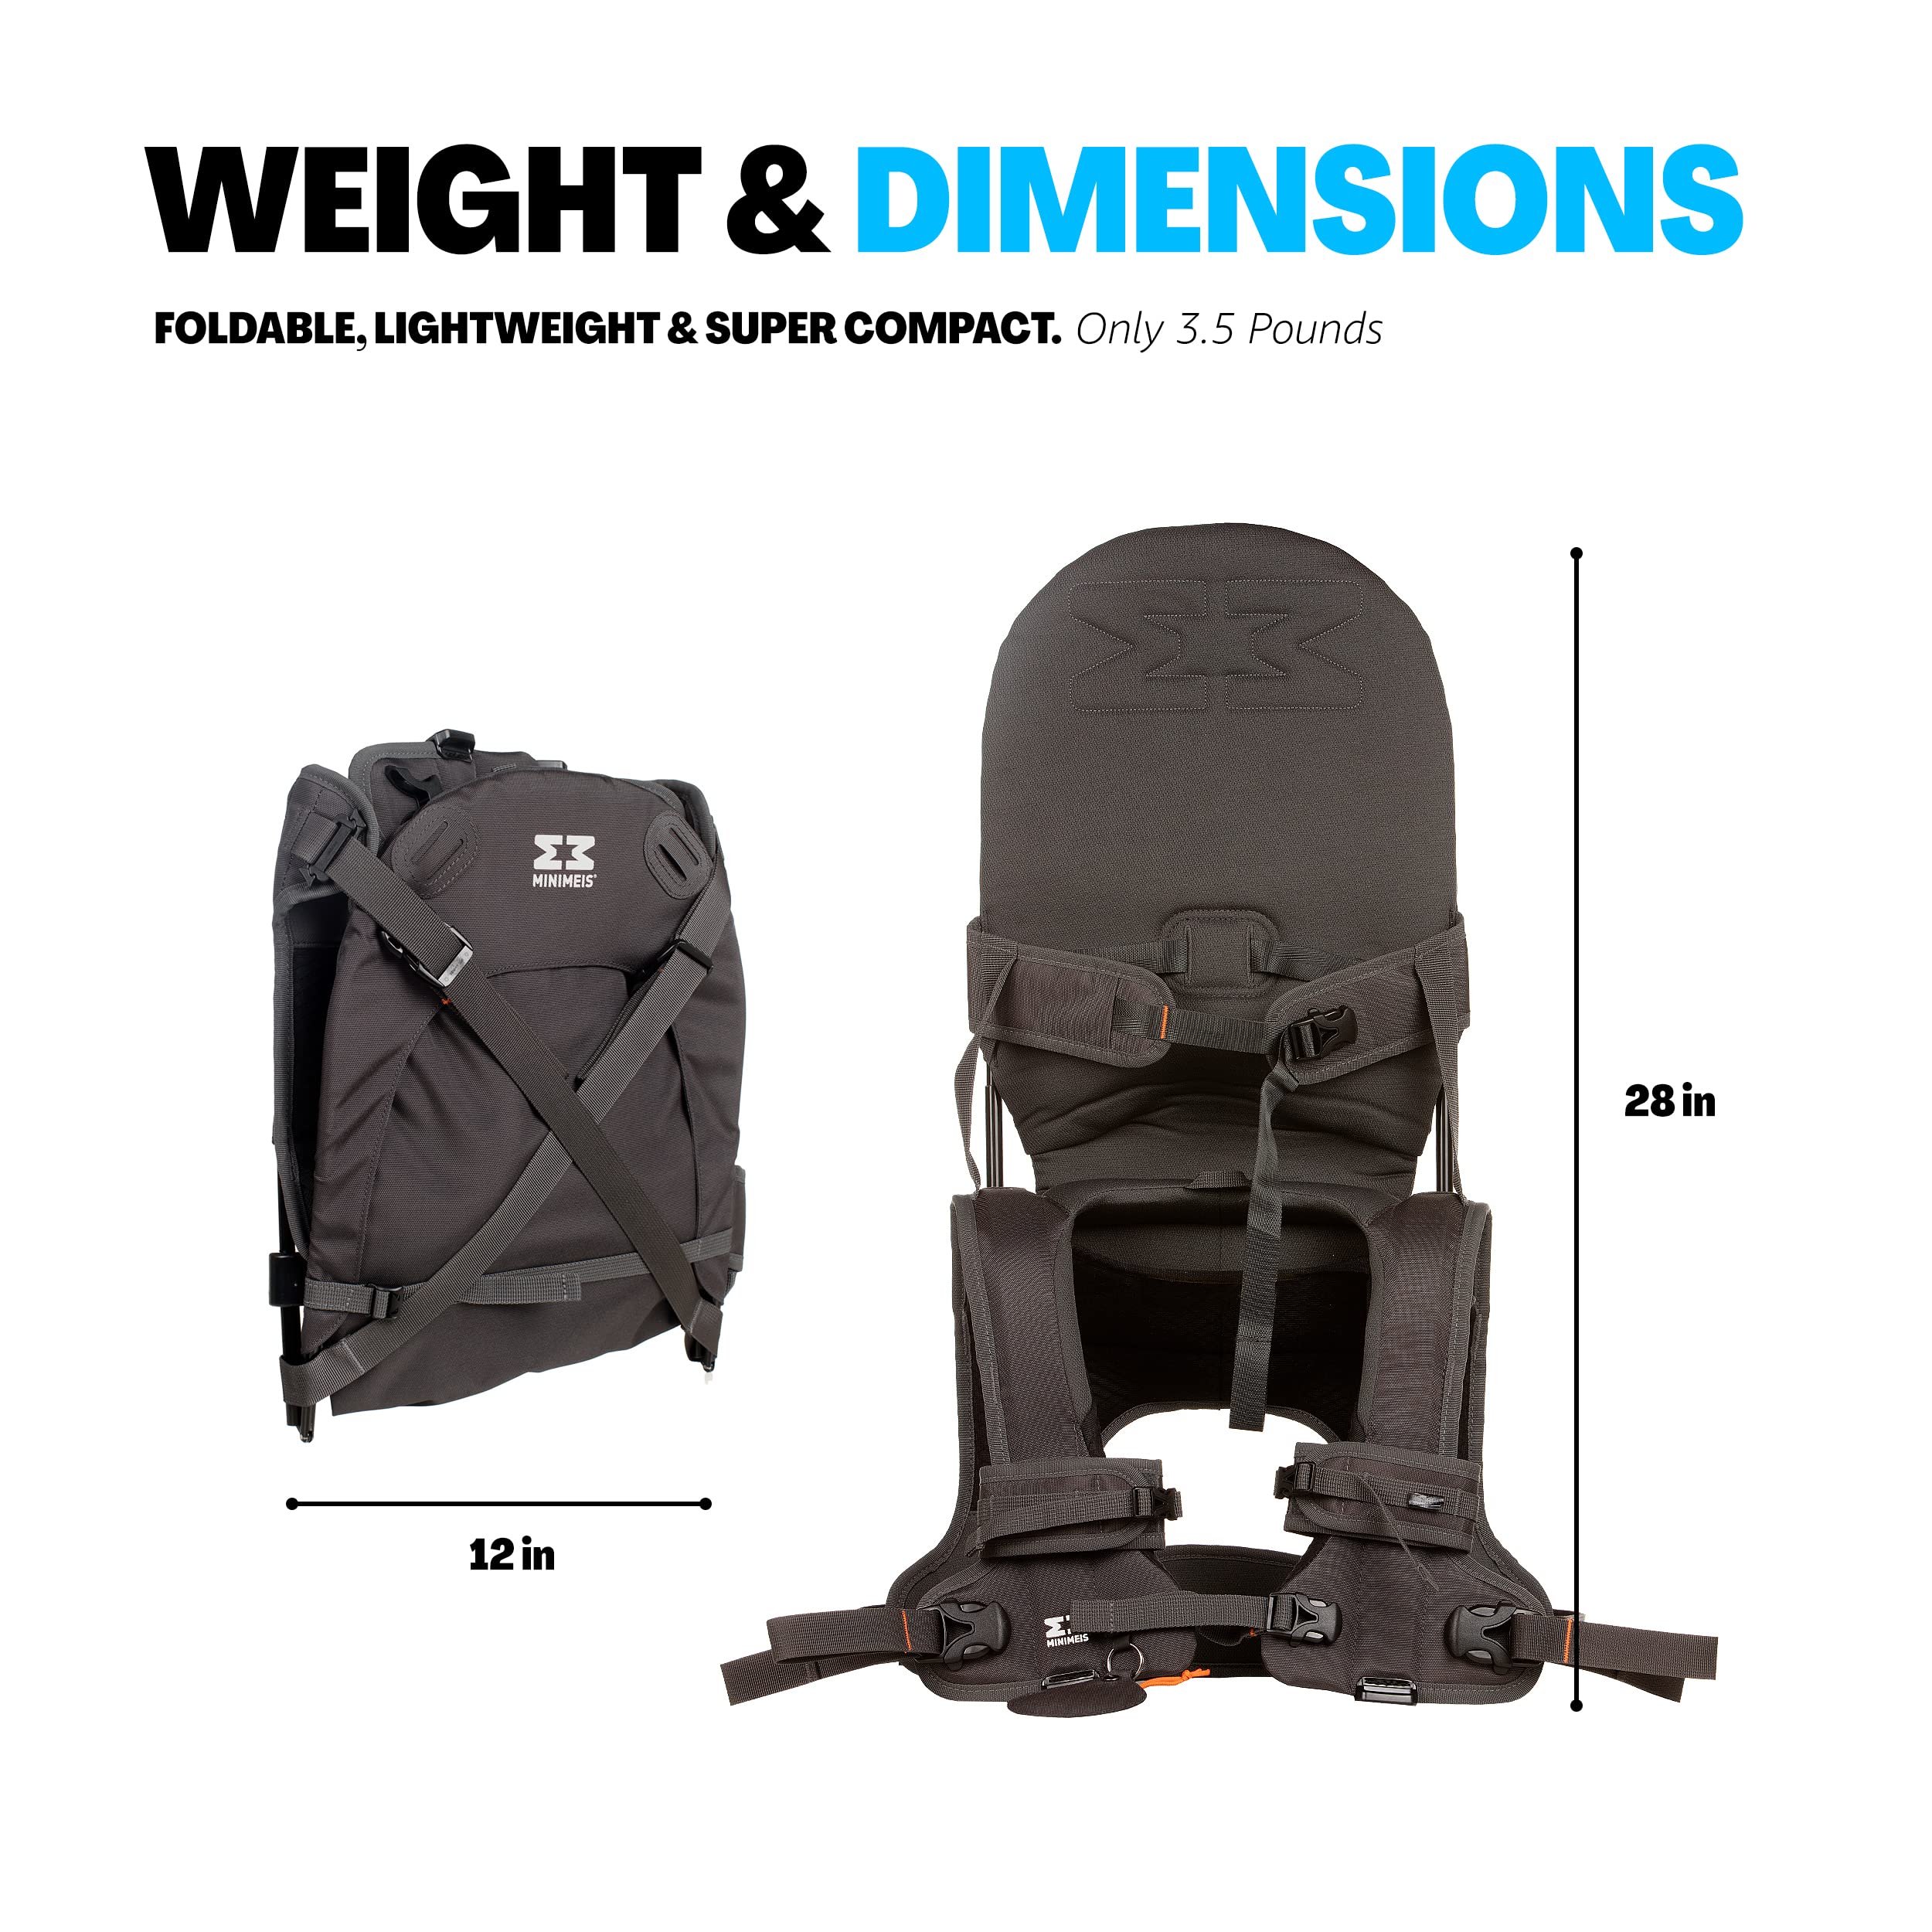 MiniMeis G4 - Lightweight Child Shoulder Carrier and Sunshade Bundle - Made for Kids 6 Months to 4 Years Old - Dark Grey